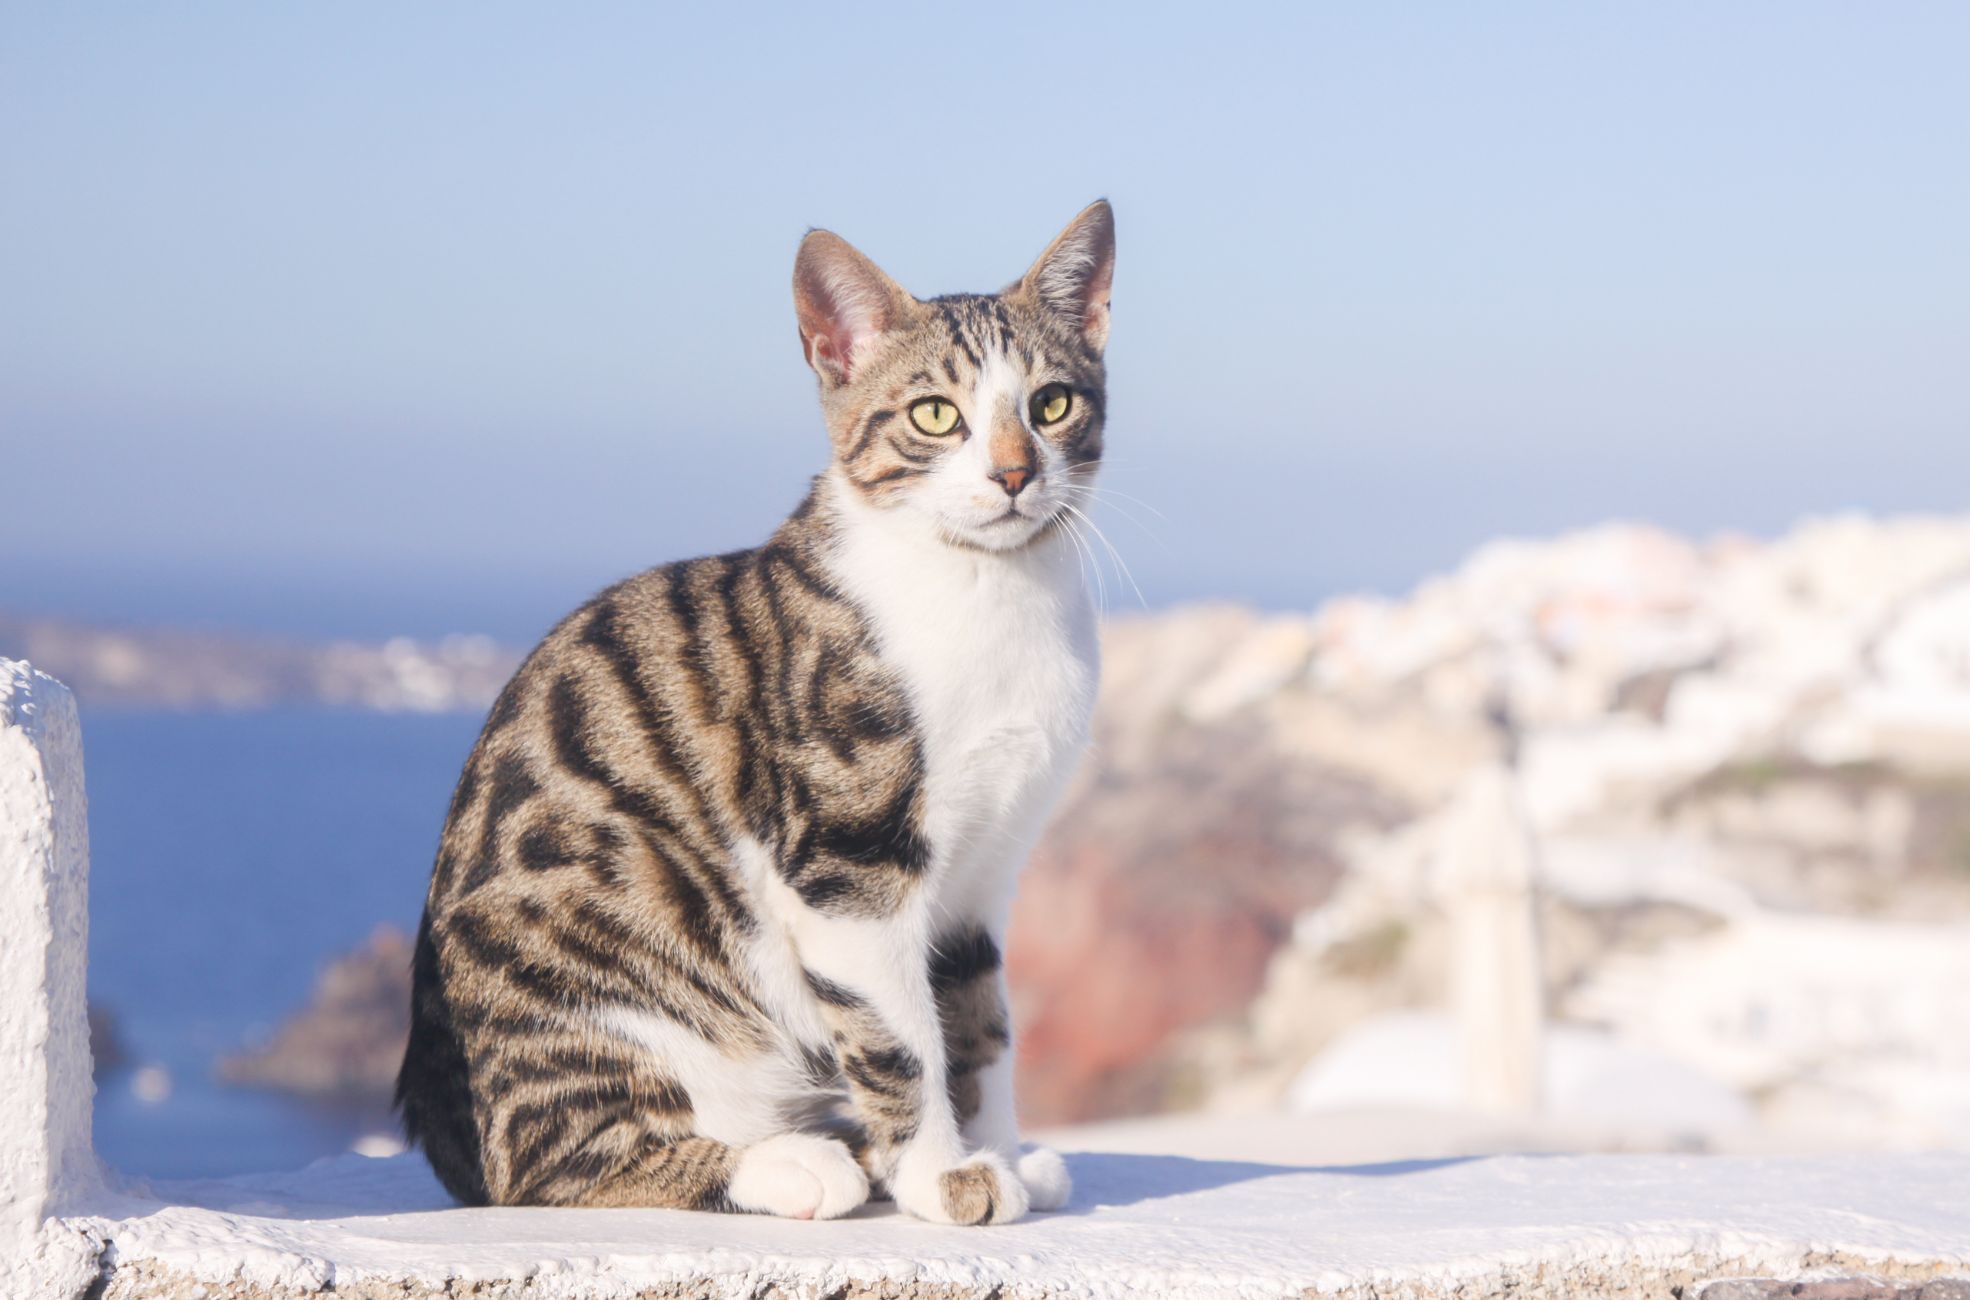 Pet Cat on Greek Wall Overlooking Ocean